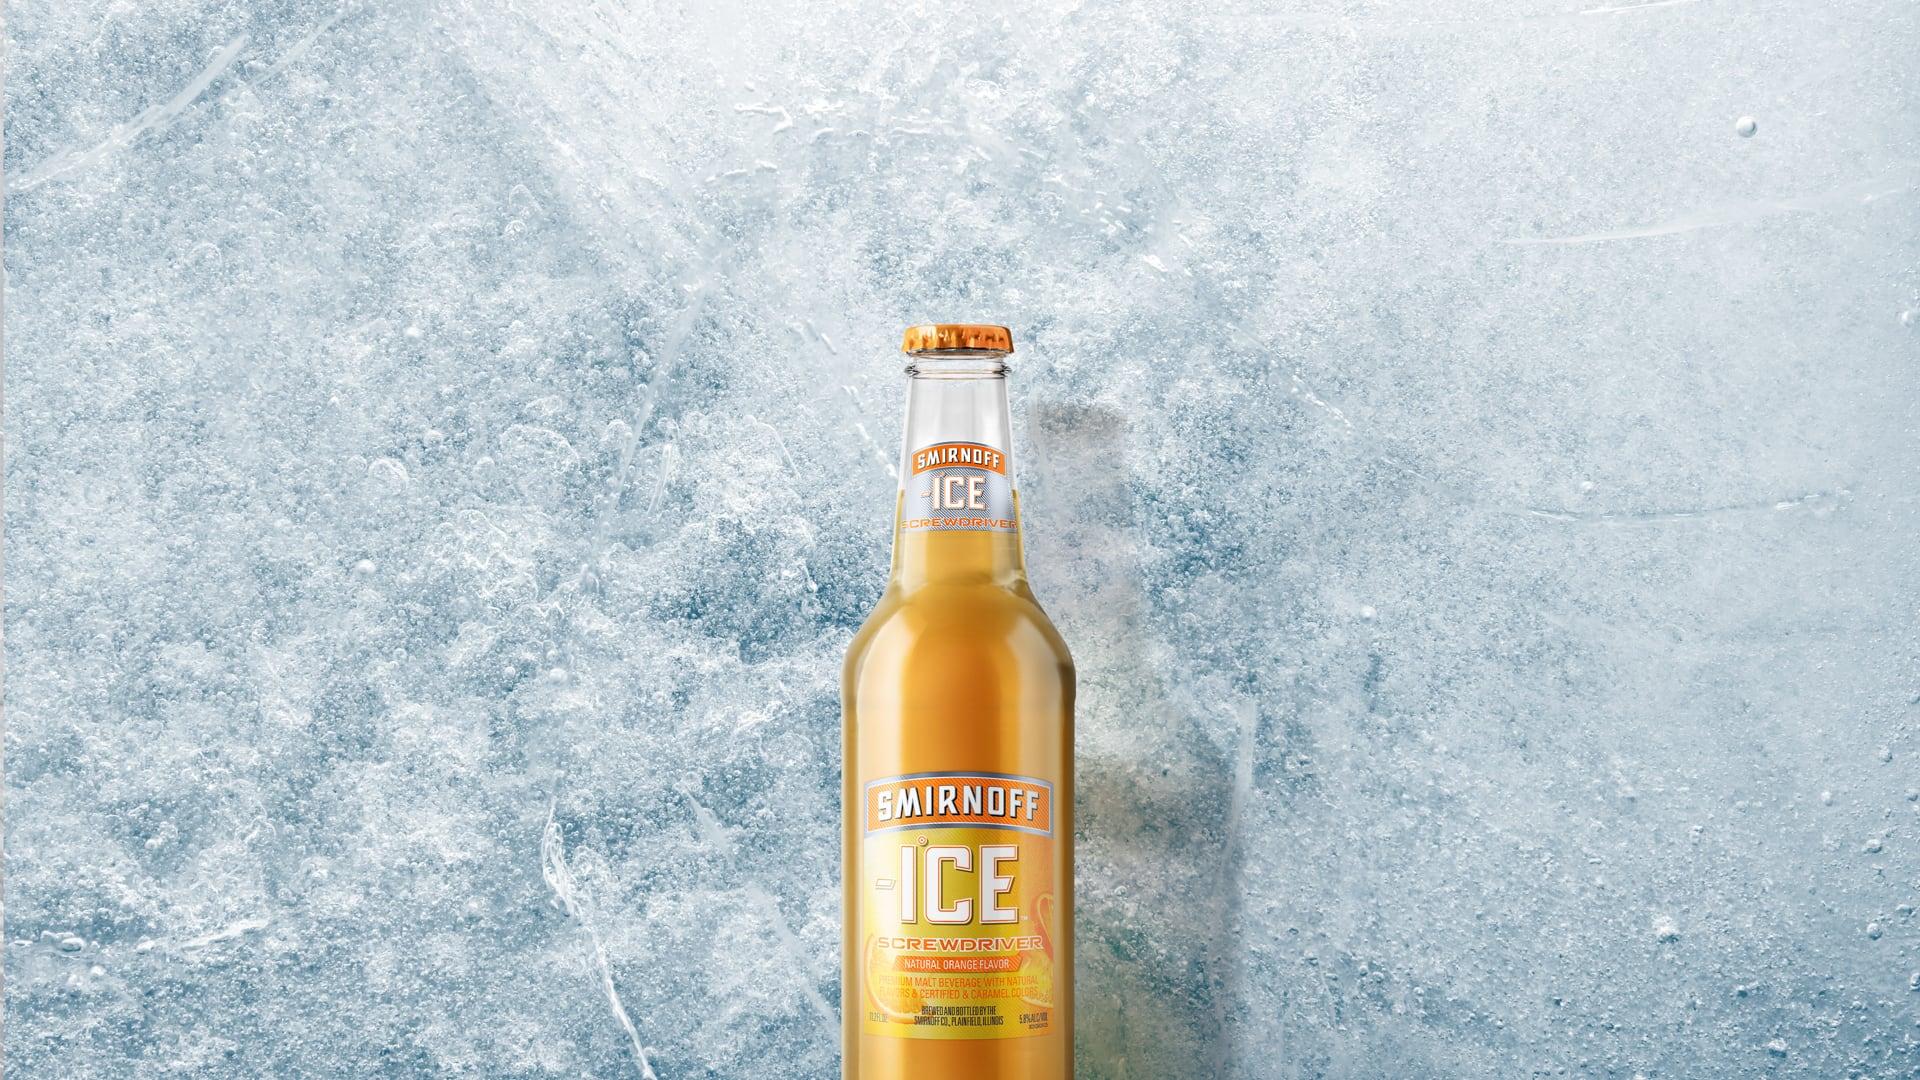 Smirnoff Ice Screwdriver on a Icy background